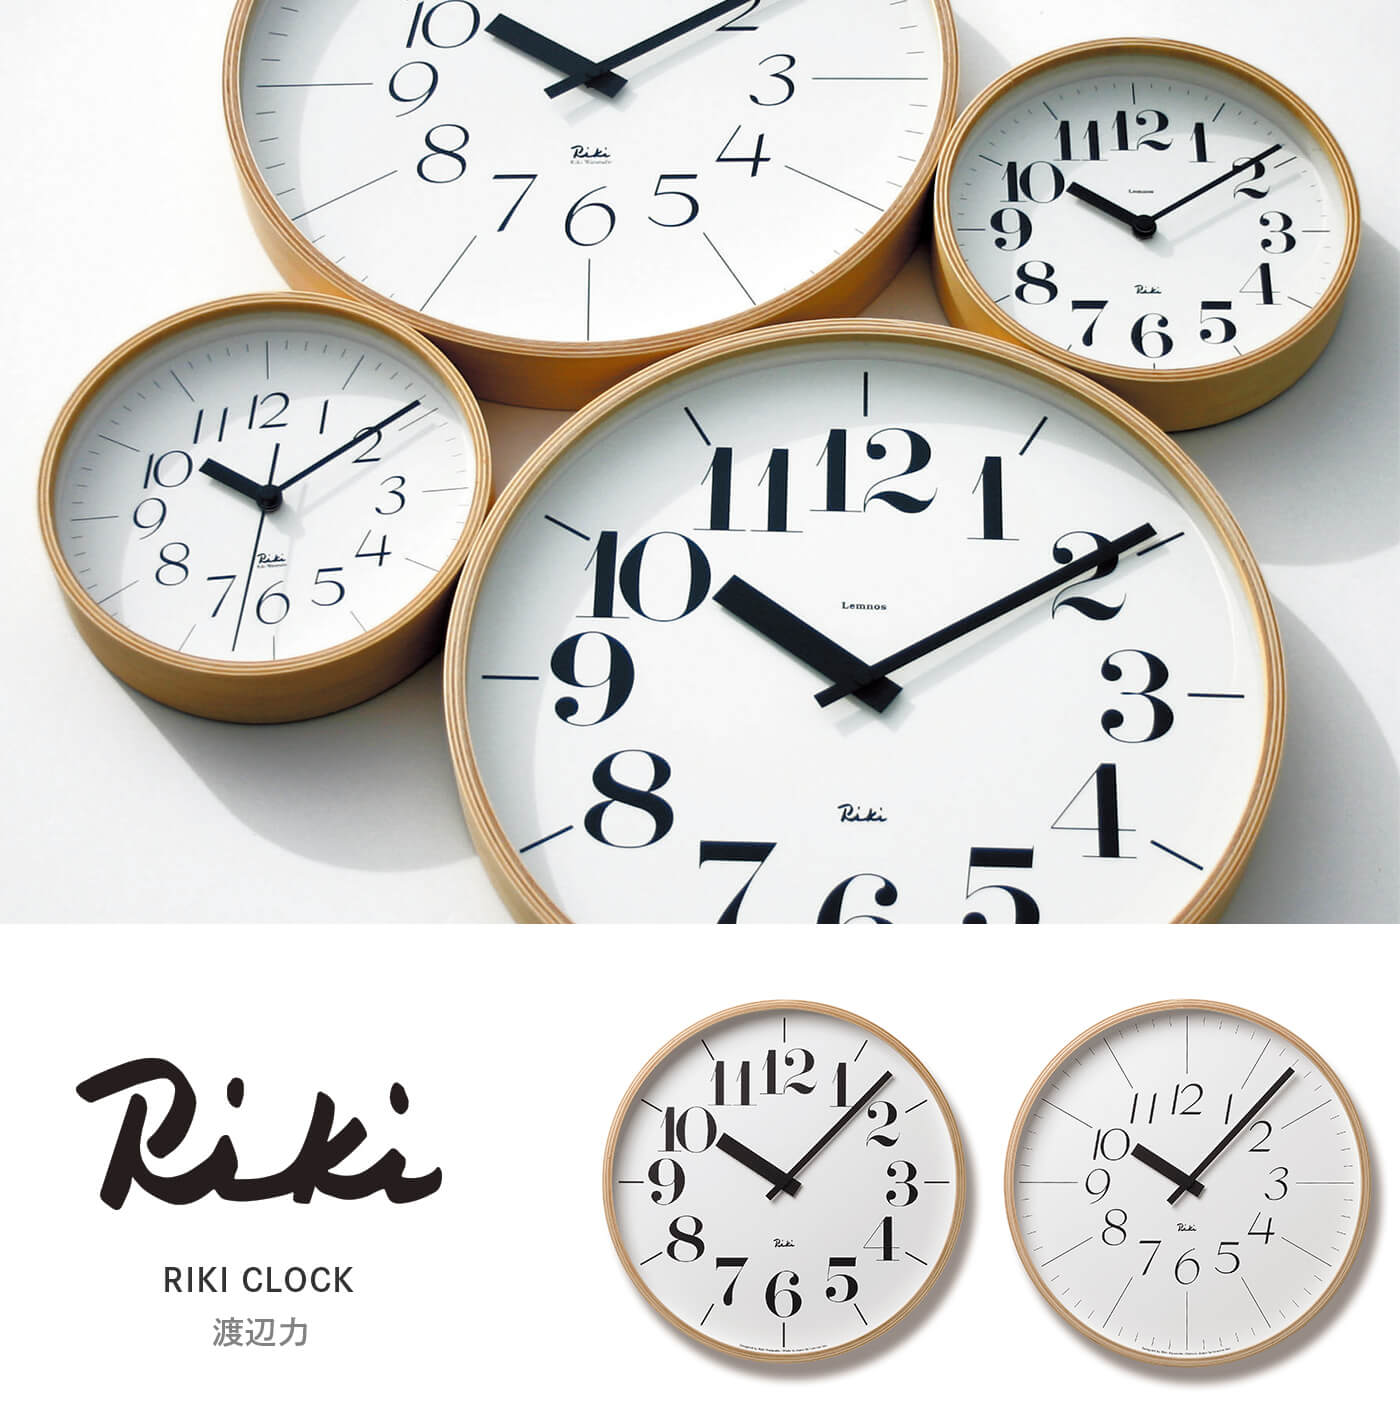 RIKI CLOCK Designed by Riki Watanabe